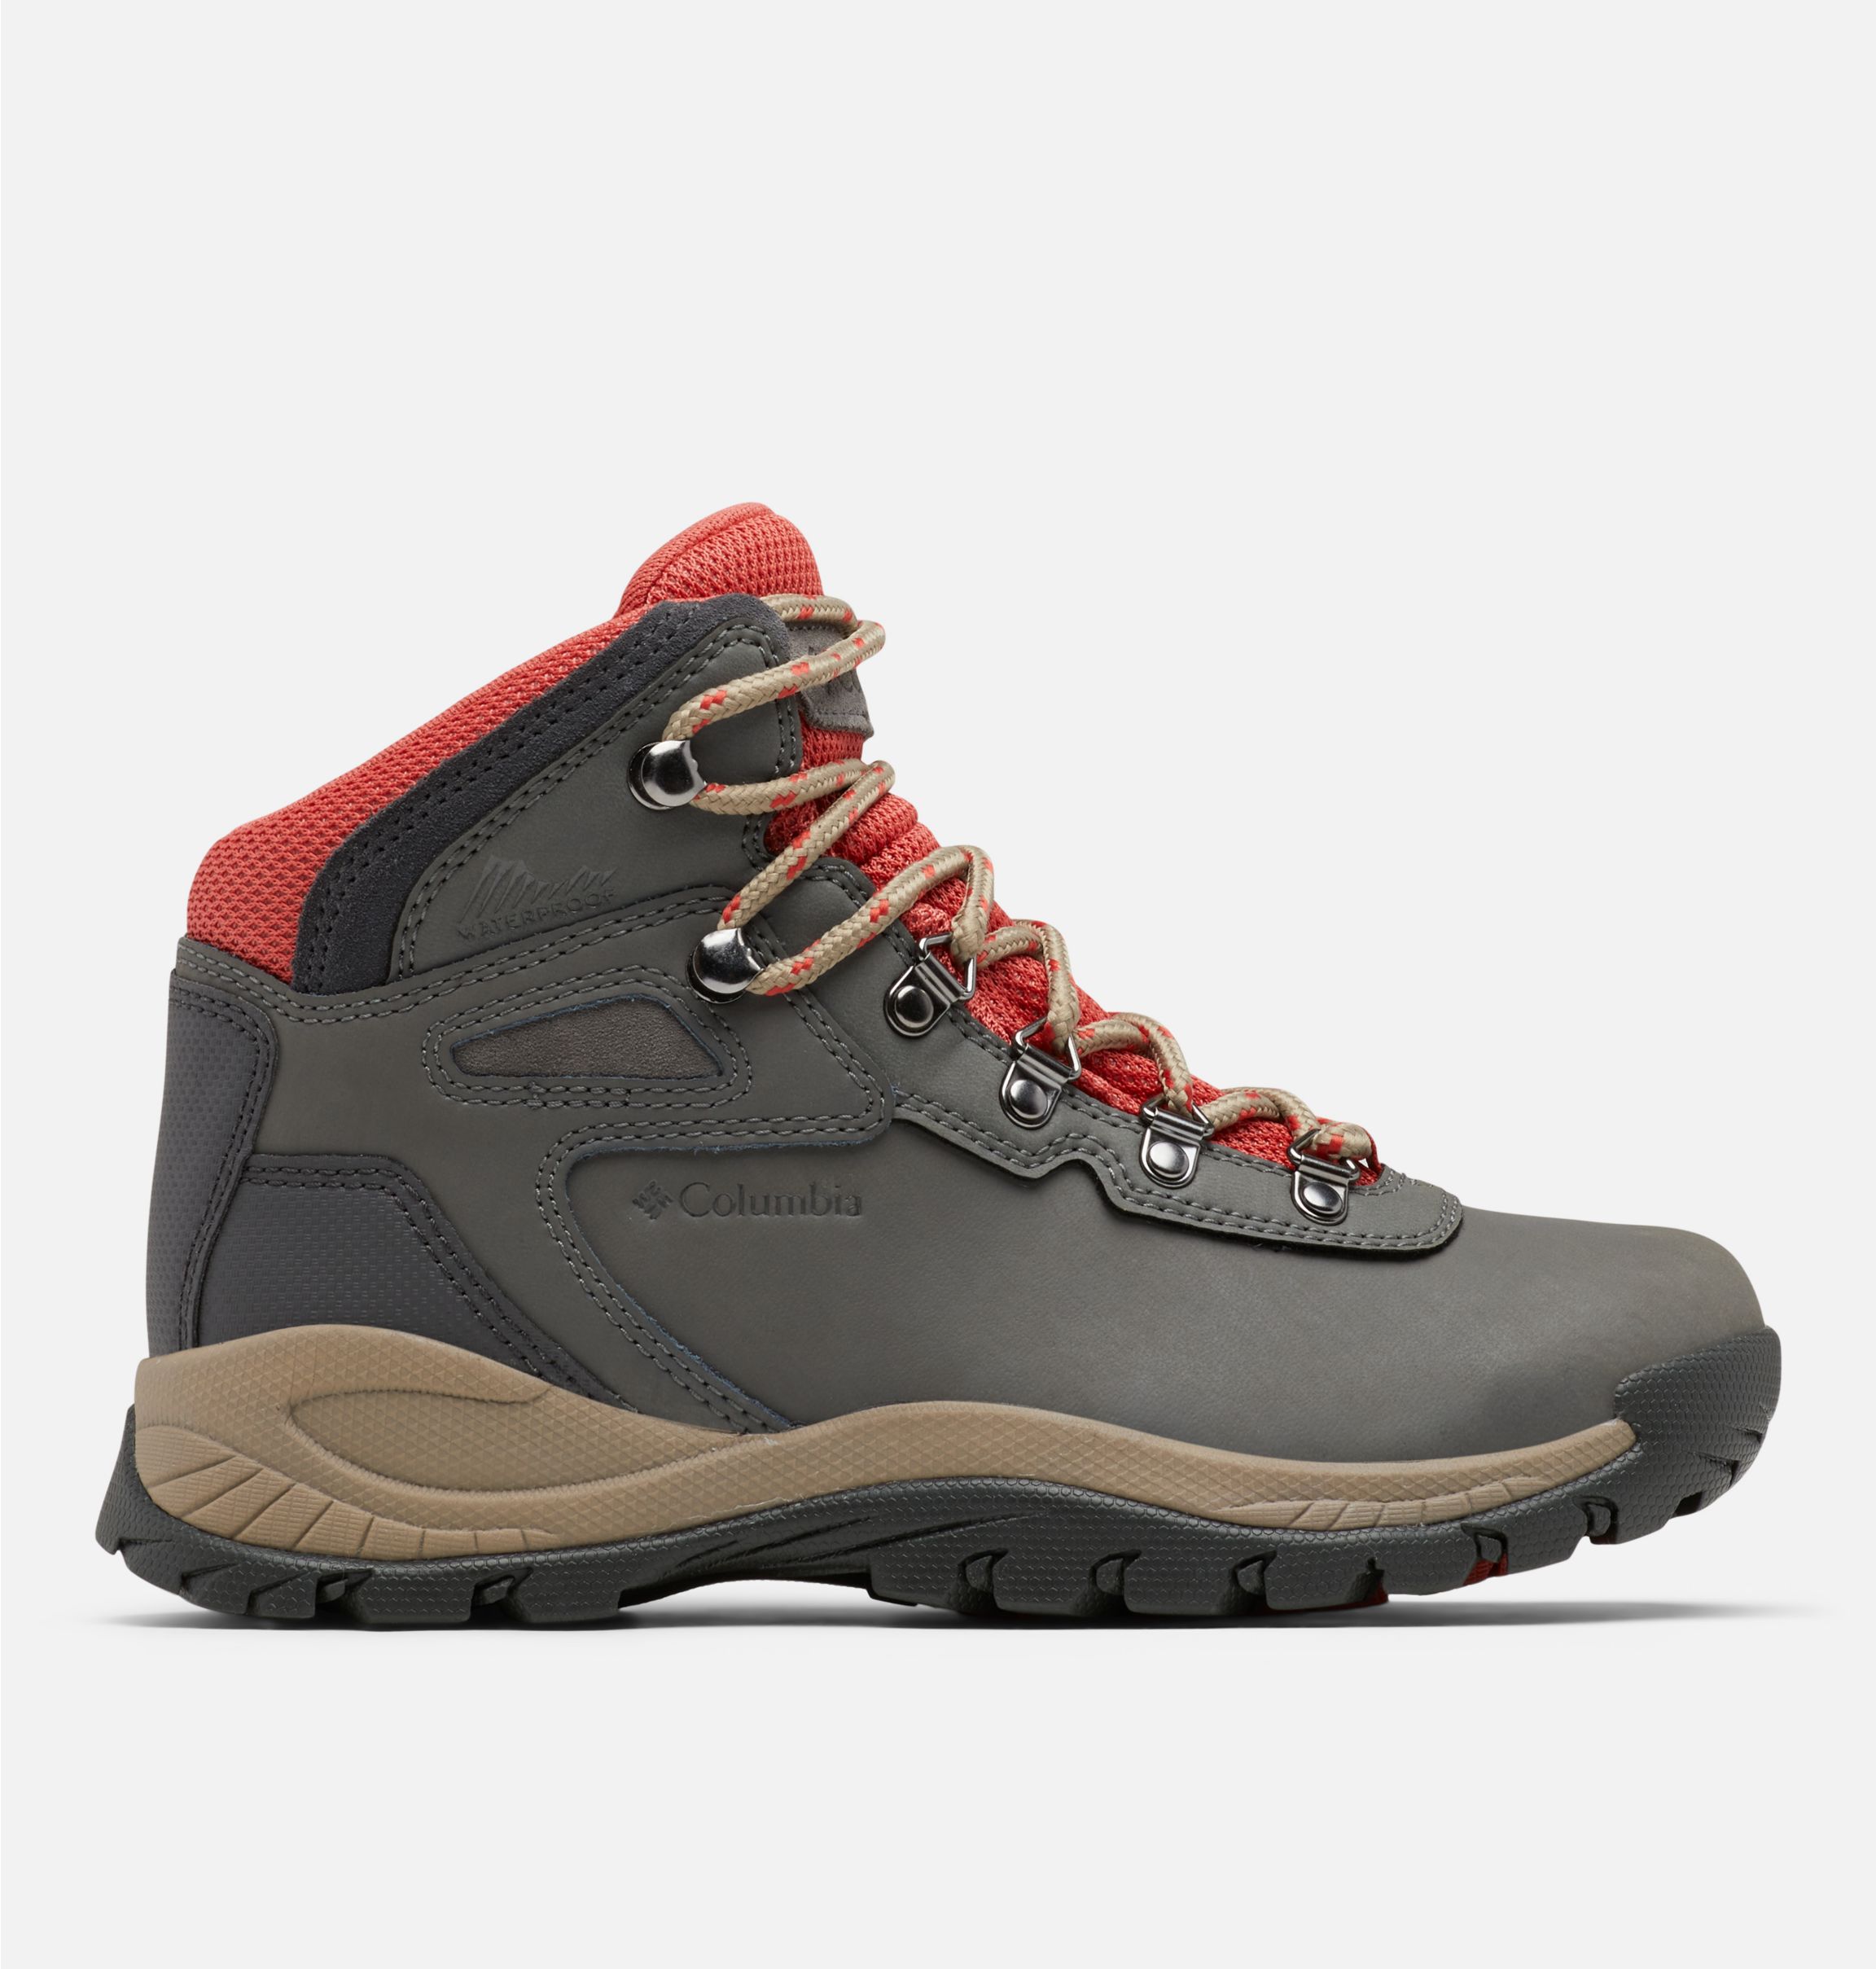 Columbia Women’s Newton Ridge Plus Hiking Boots